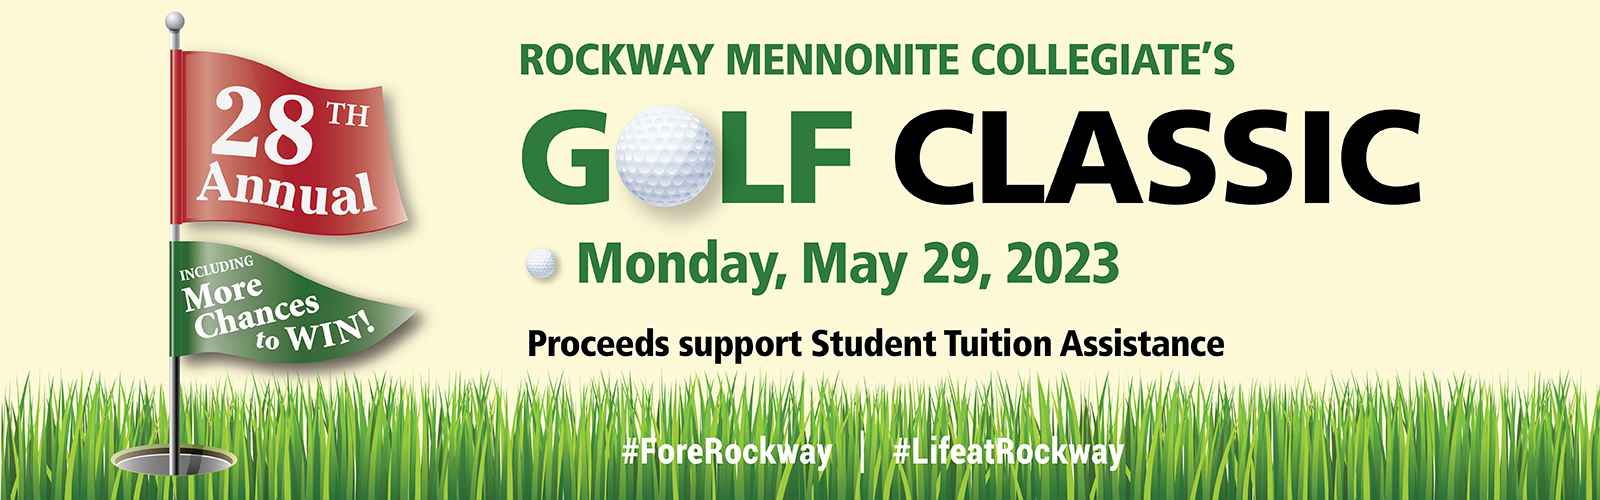 Annual Rockway Golf Classic - Rockway Mennonite Collegiate